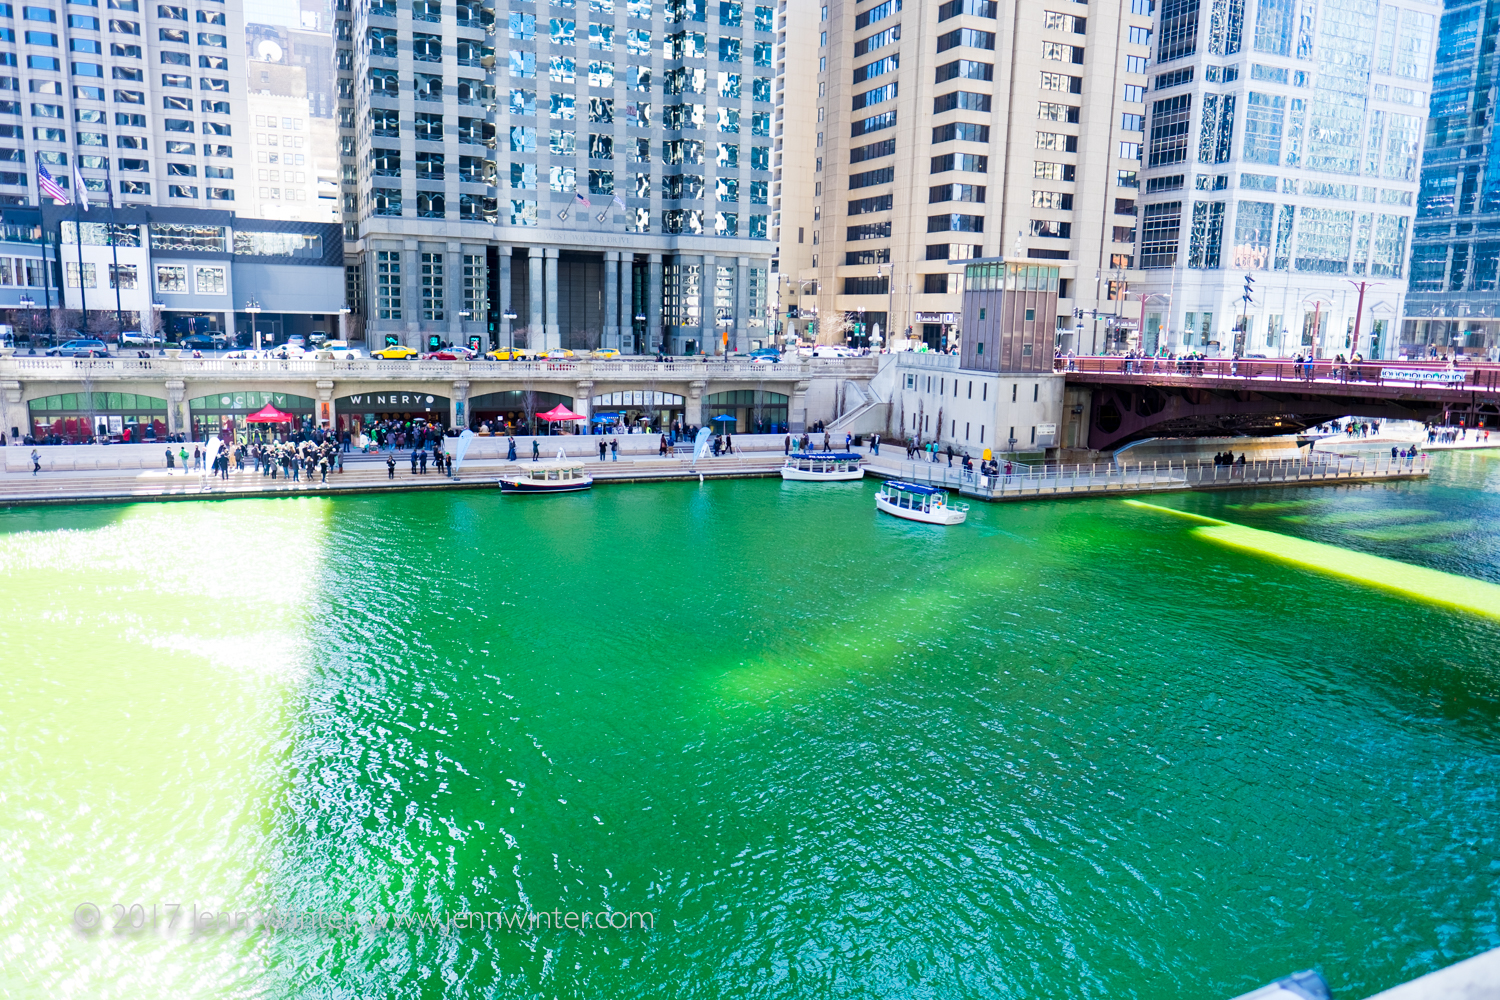 Celebrating St. Patrick’s Day on Chicago’s Green River